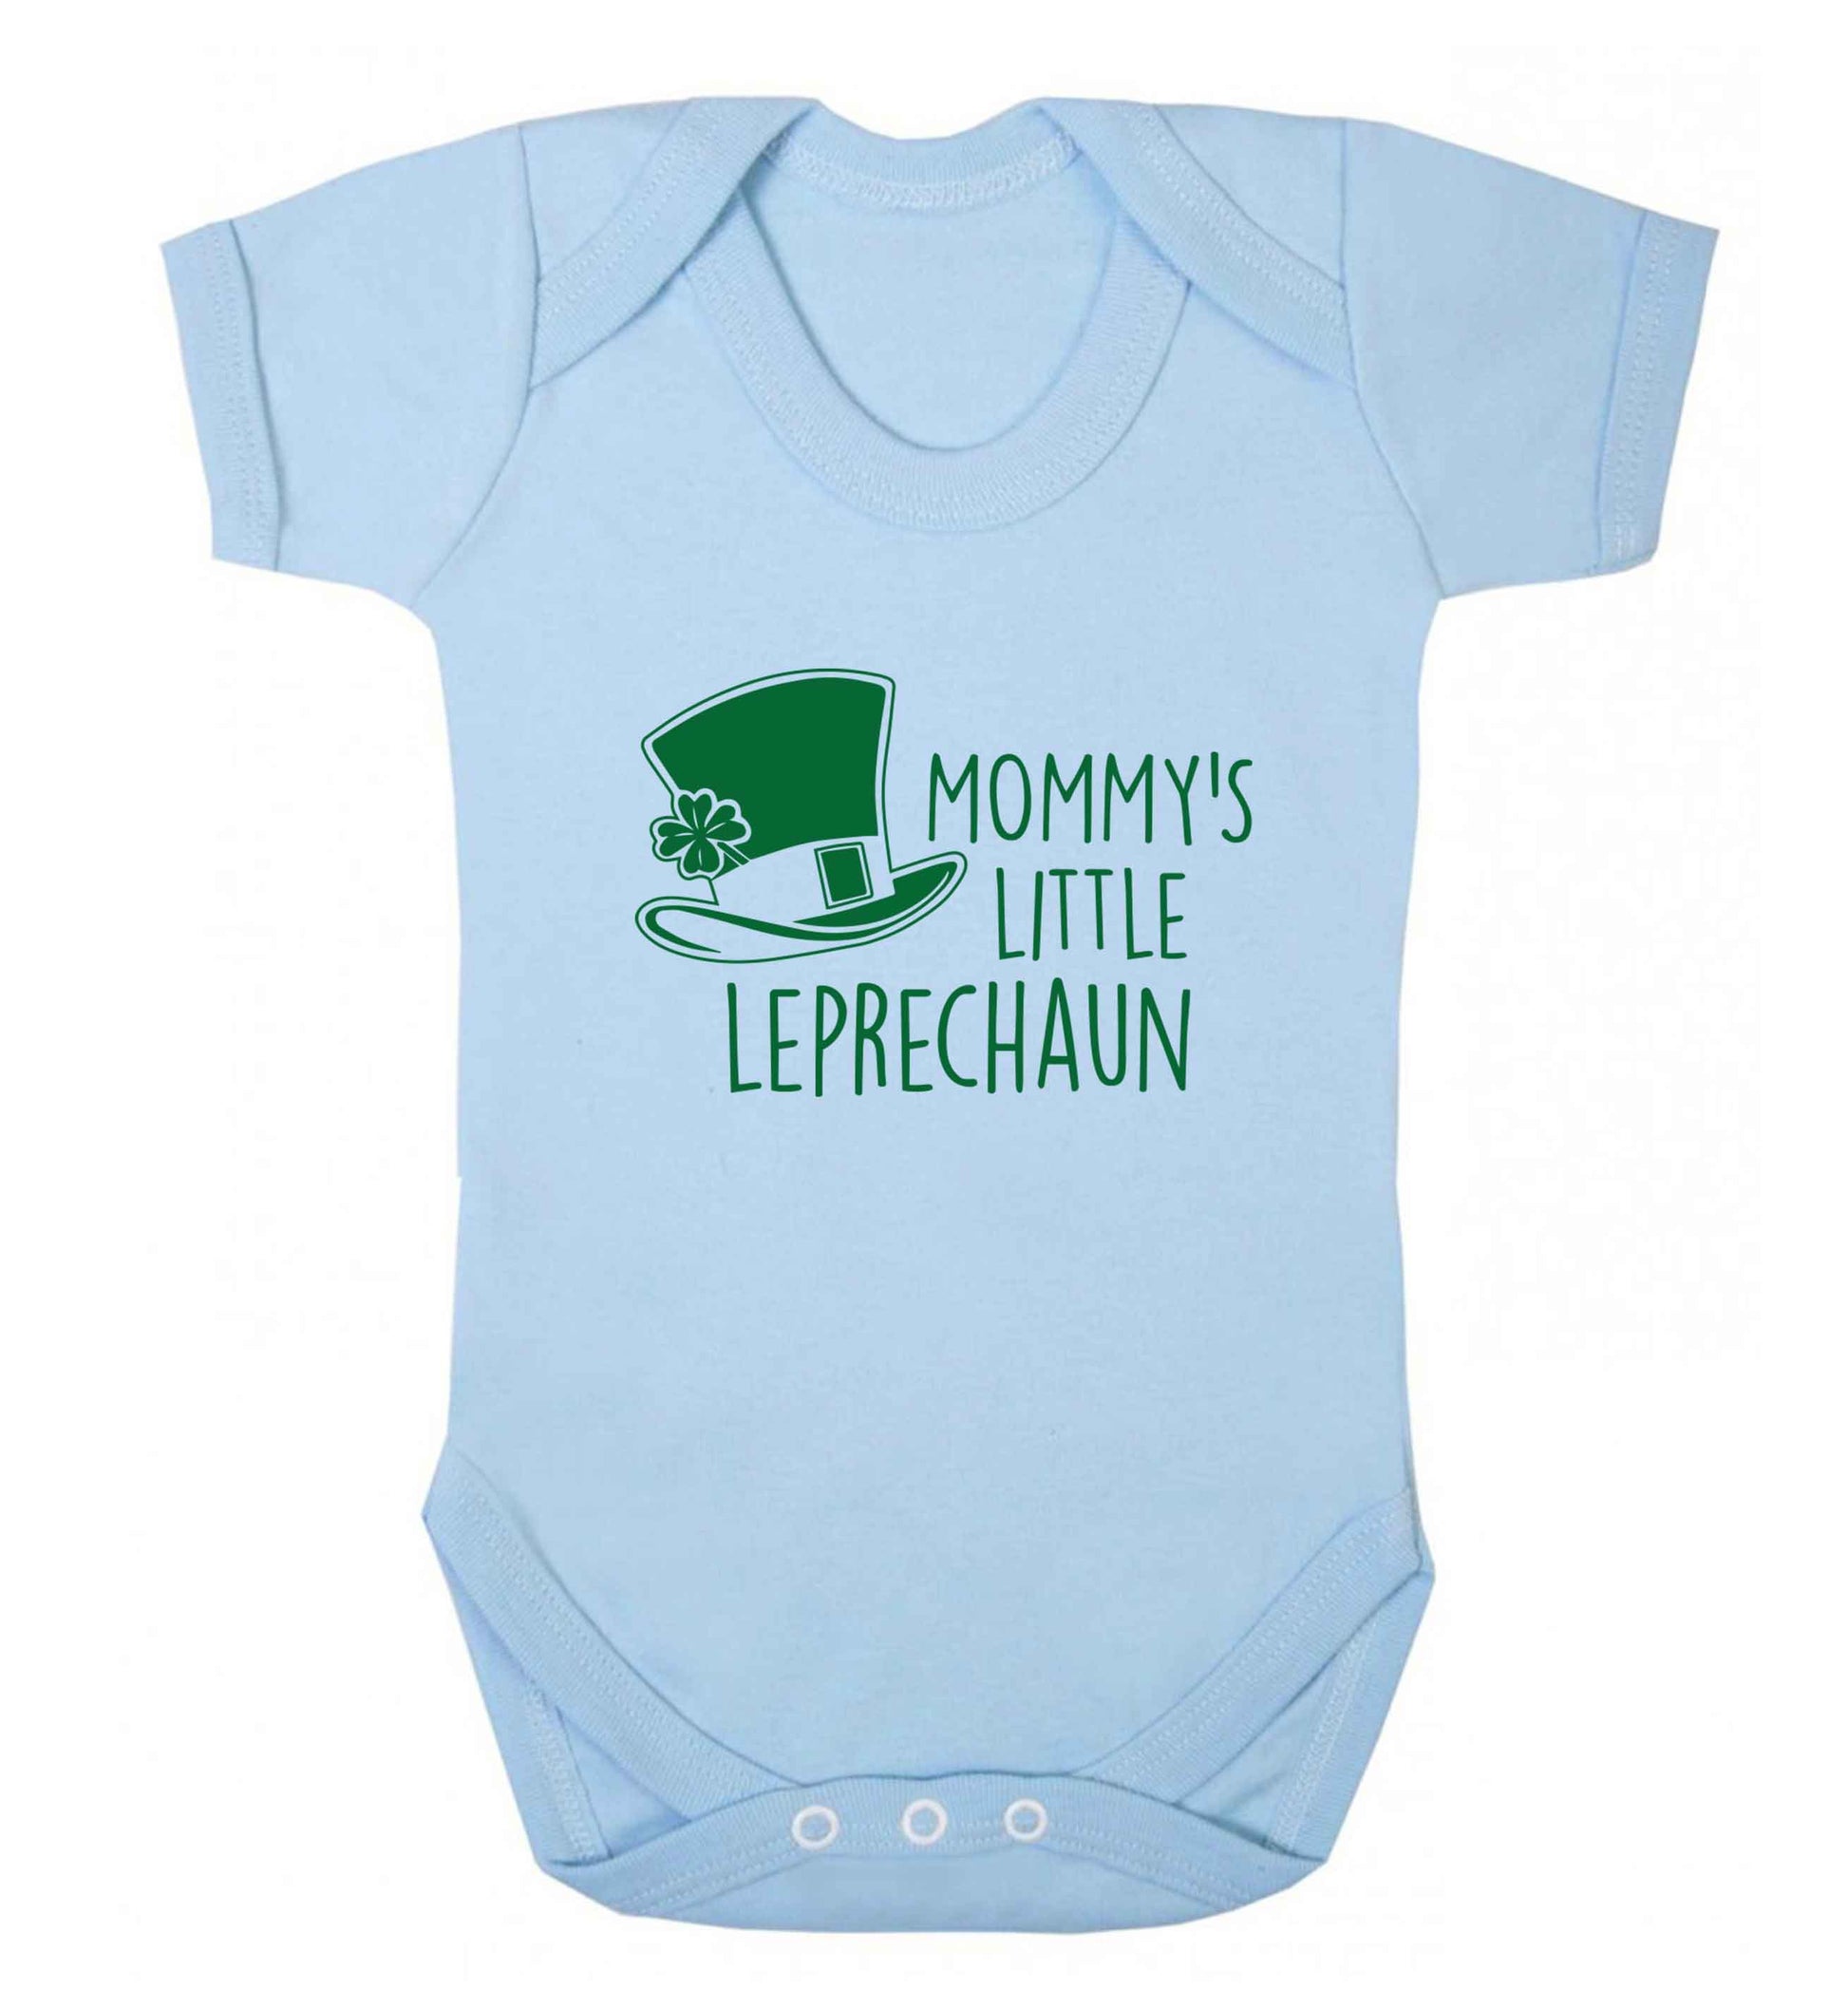 Mommy's little leprechaun baby vest pale blue 18-24 months